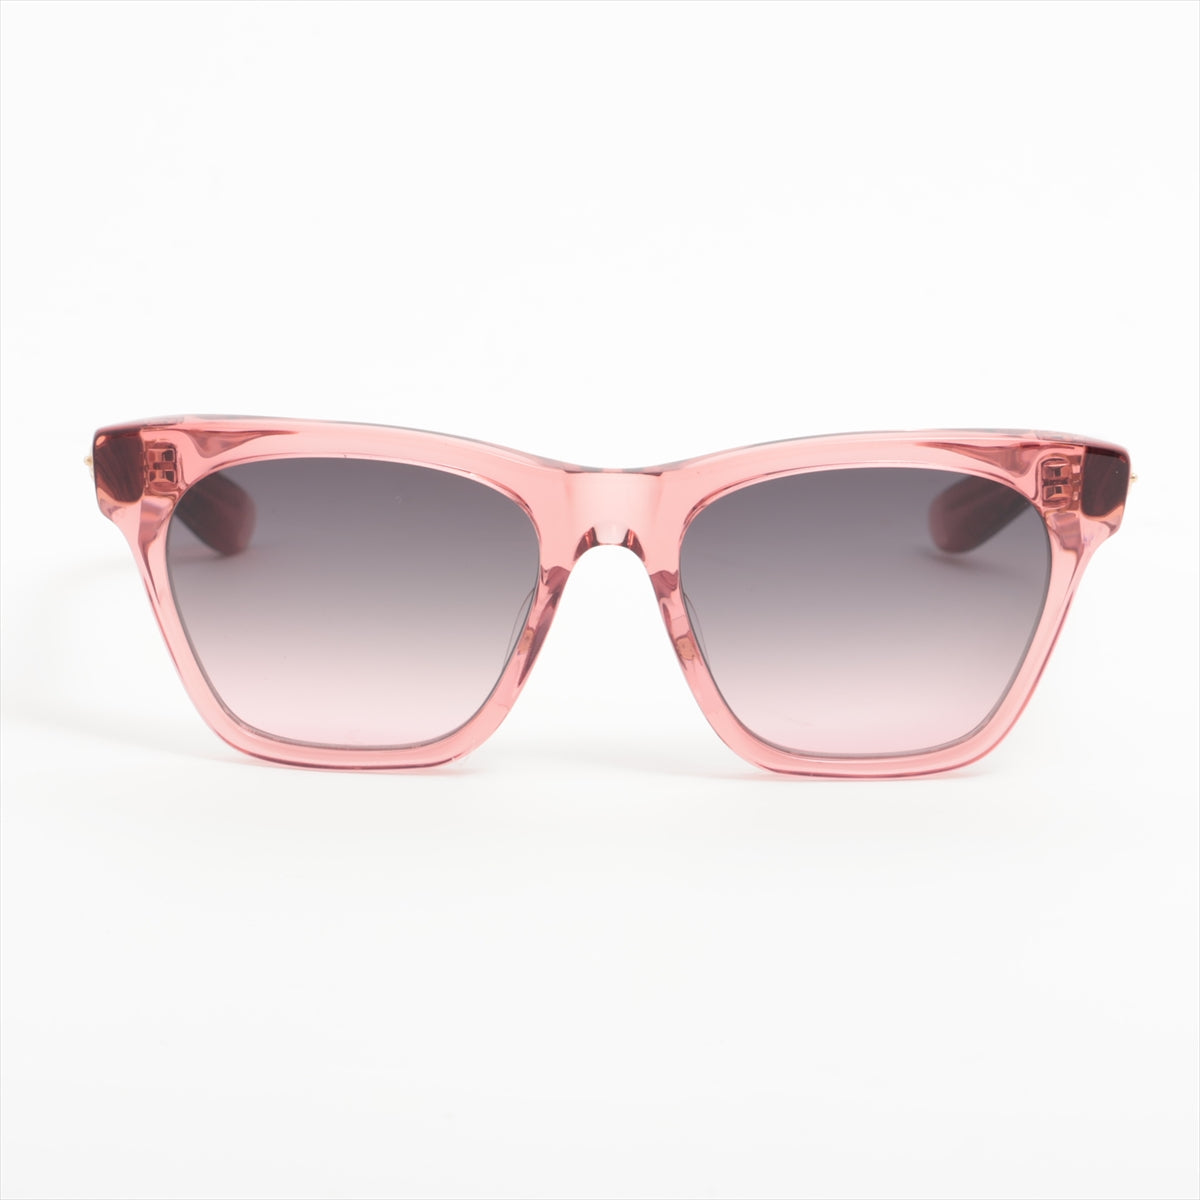 Chrome Hearts Sunglasses Unknown material 53□19-142 pink x gold CLITTERATI